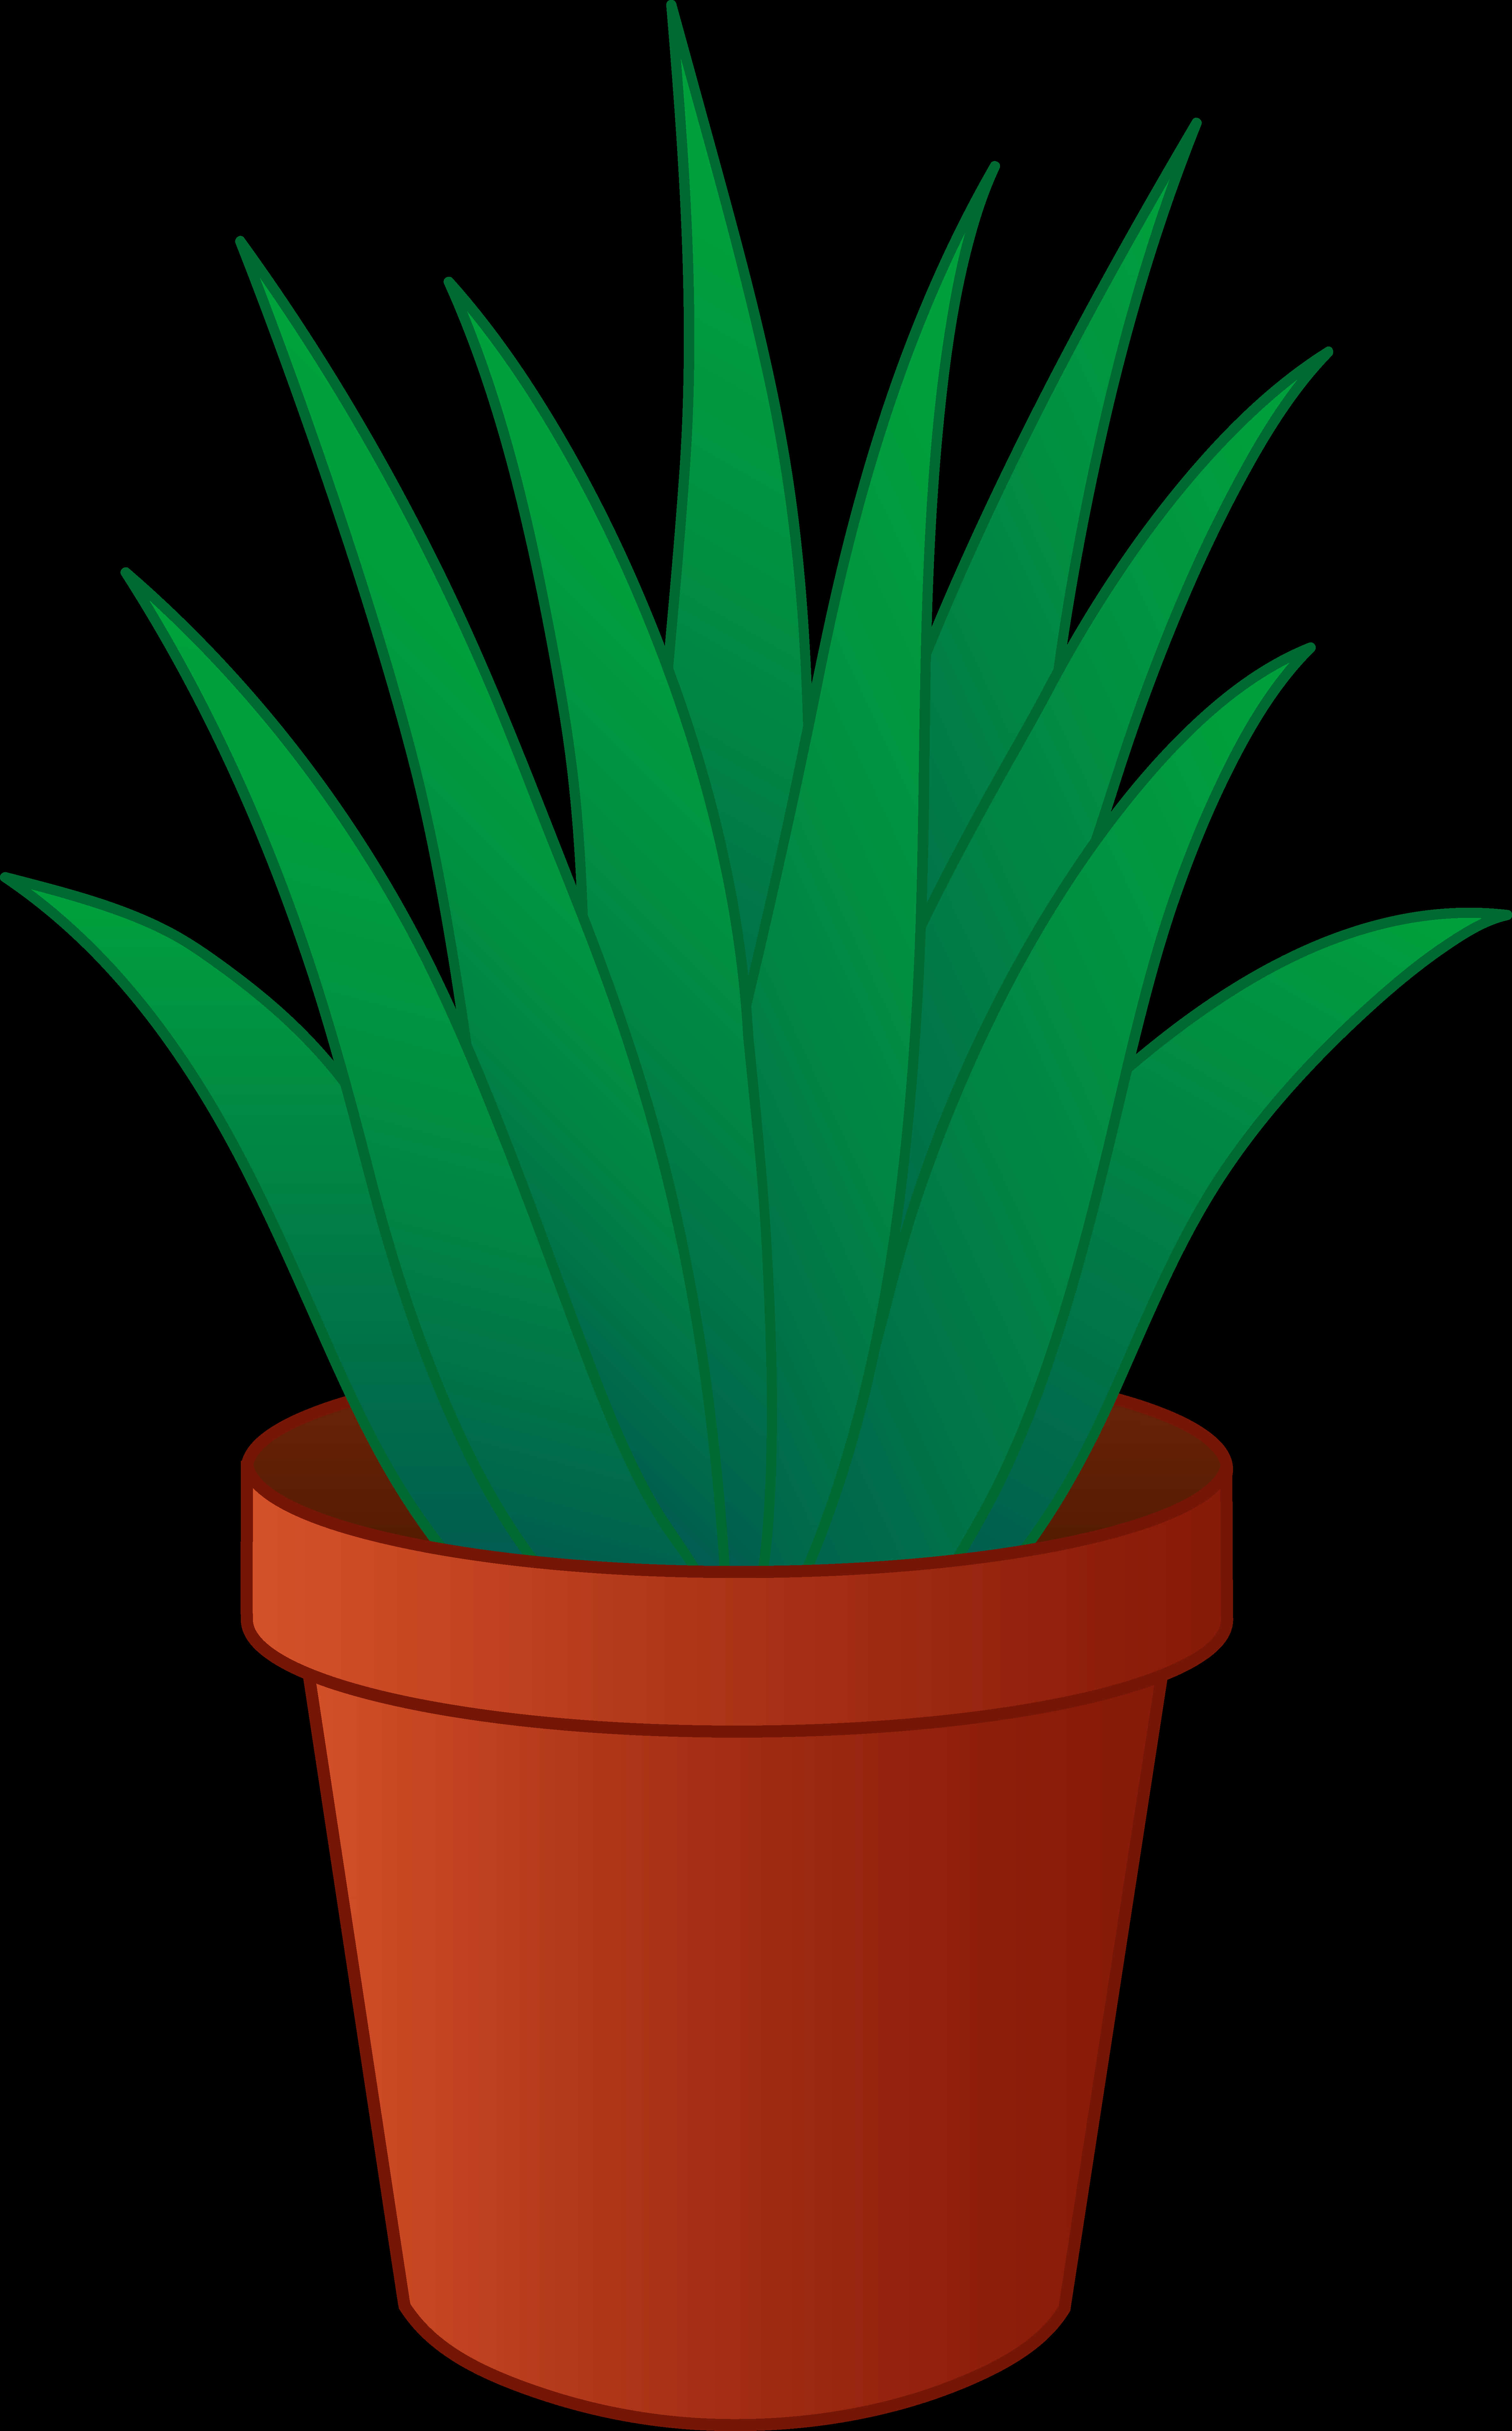 Green Plantin Terra Cotta Pot Illustration PNG